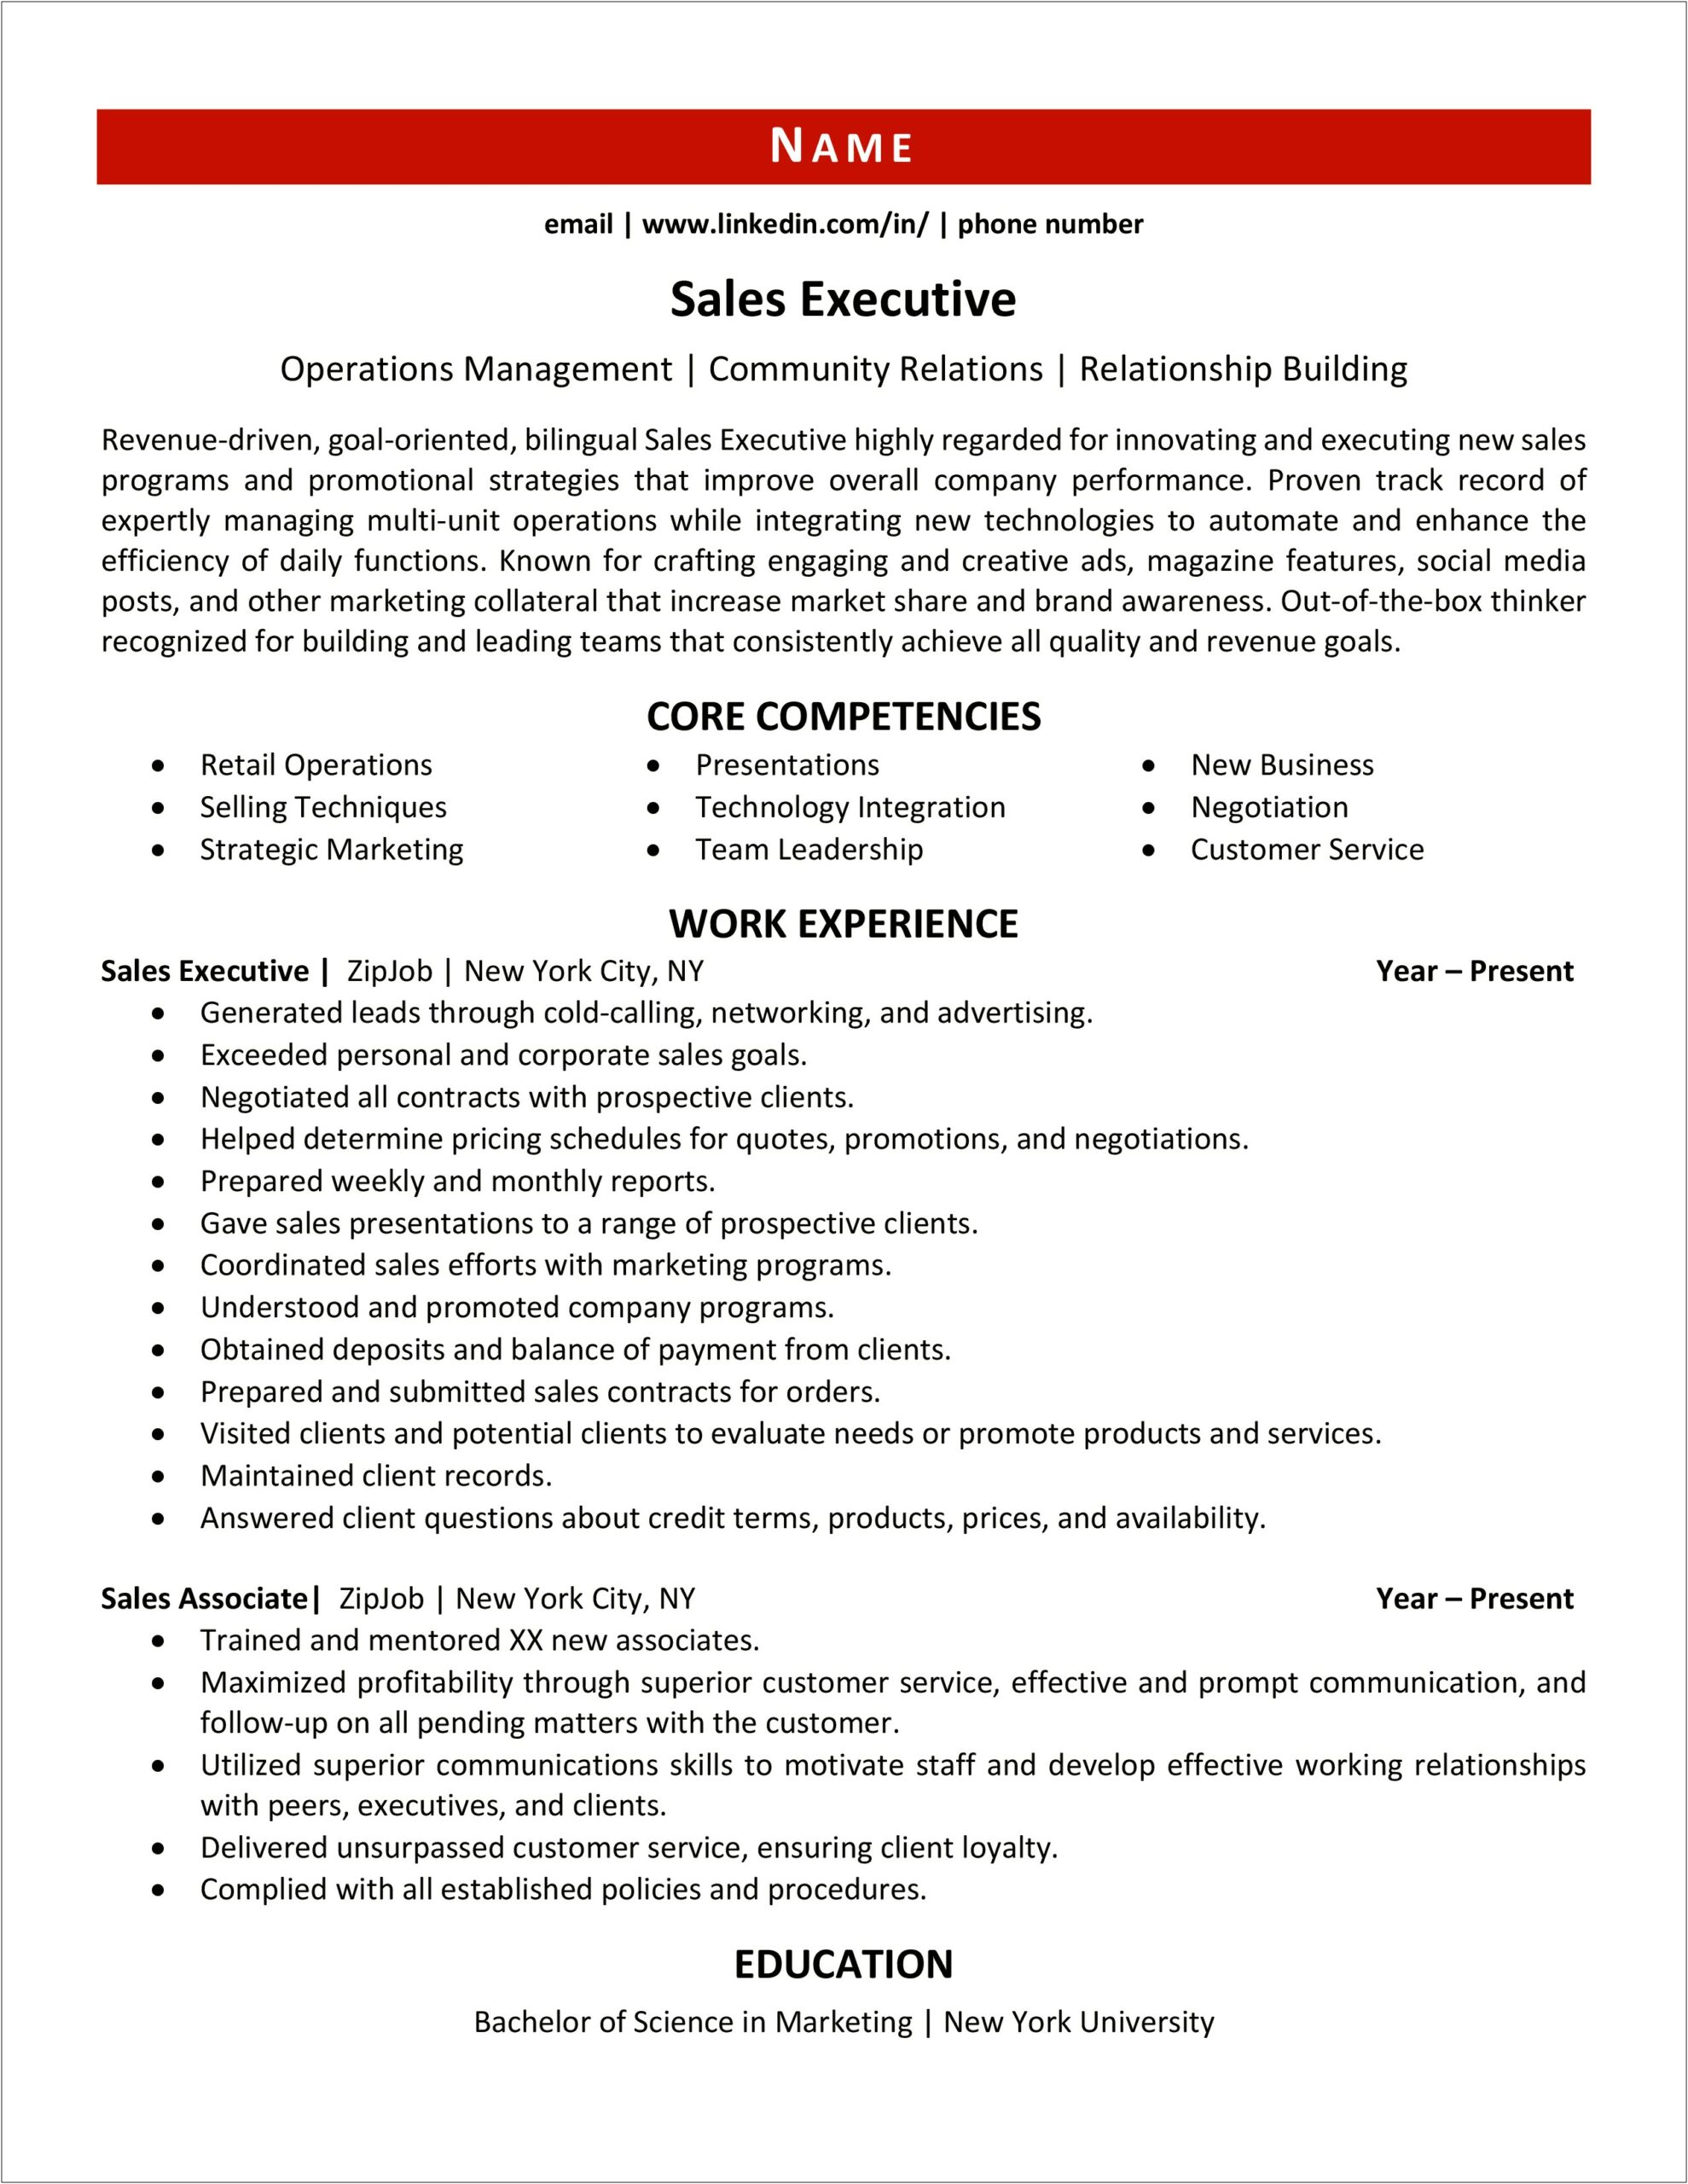 Sales Executive Skills In Resume